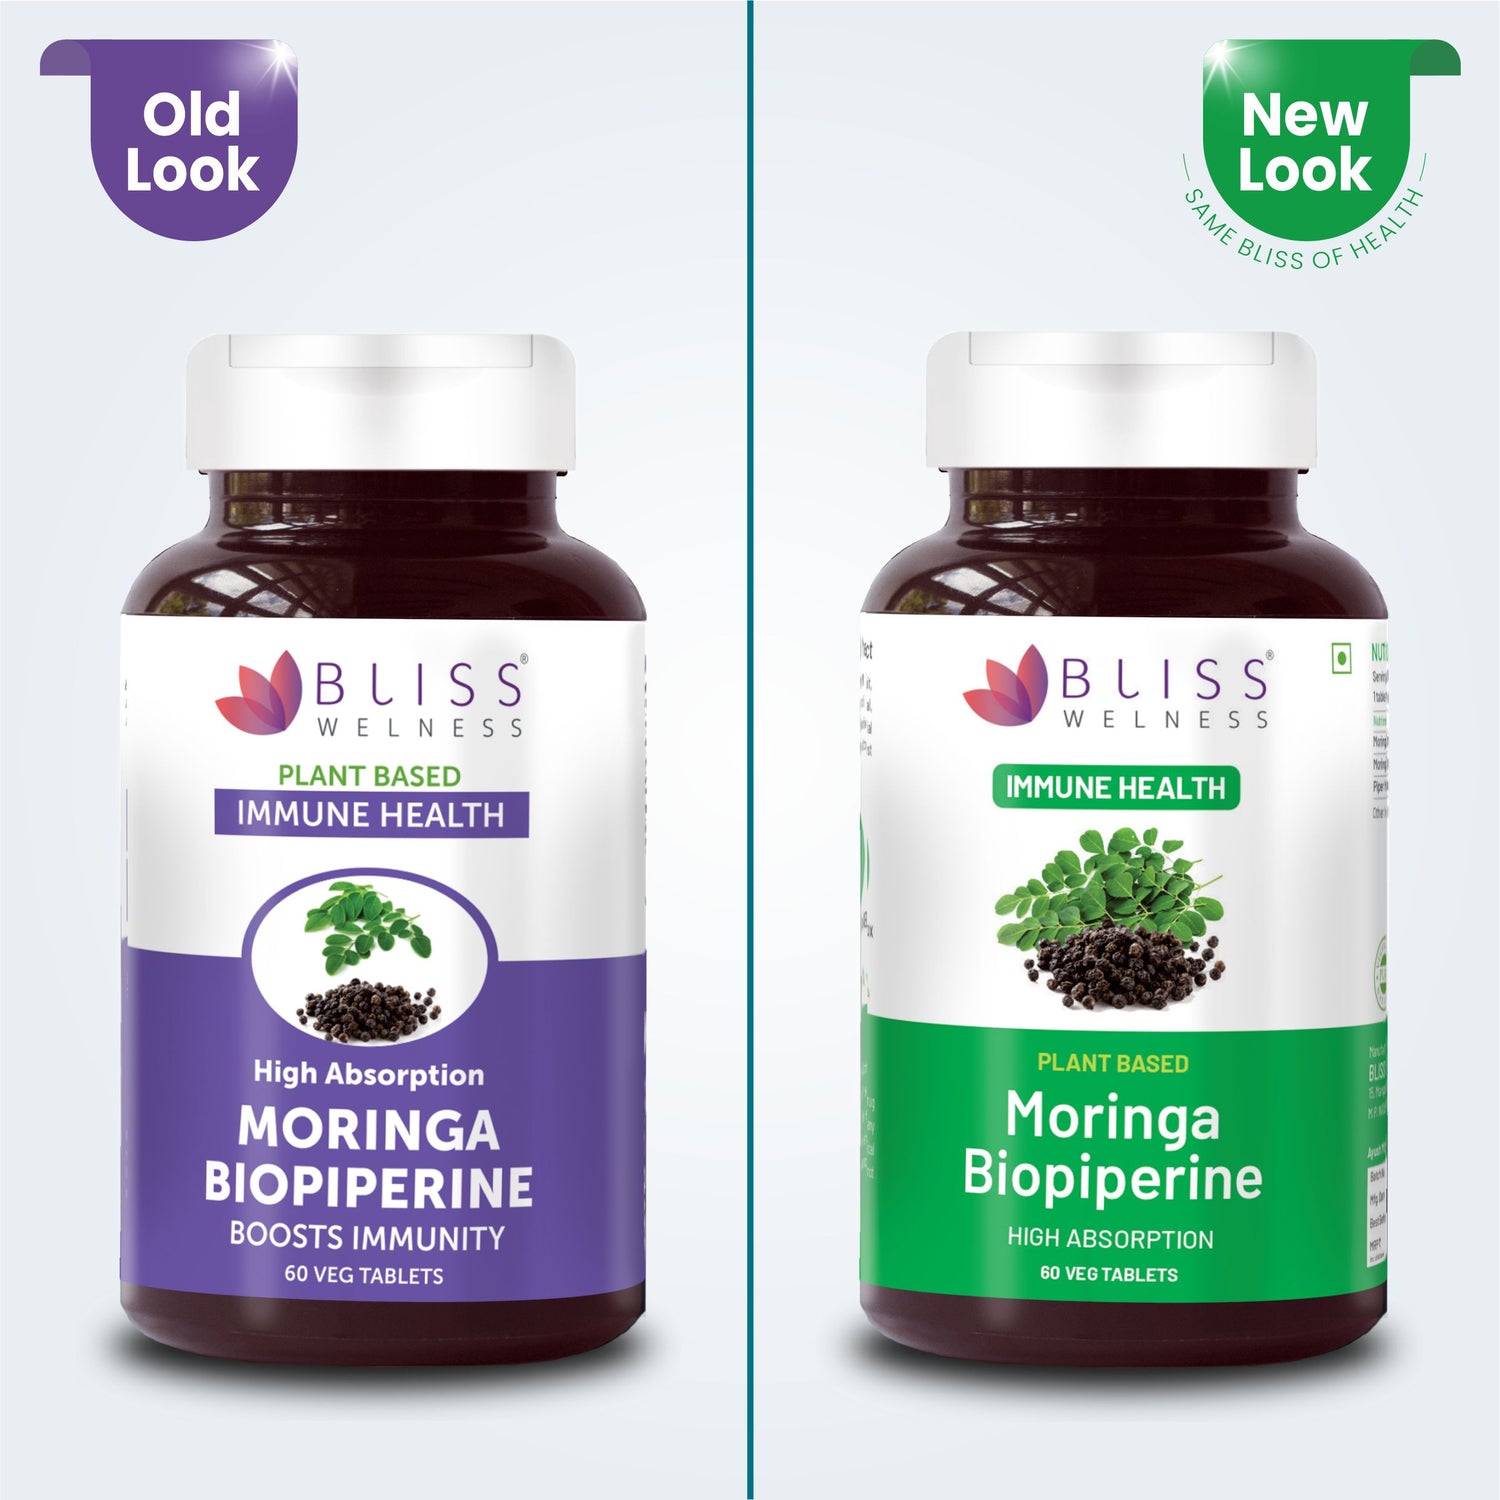 moringa tablet powder capsule ayurvedic organic age leaf oil weight loss supplement fat burner multivitamins amino acids antioxidant leaf extract detox immunity antioxidant